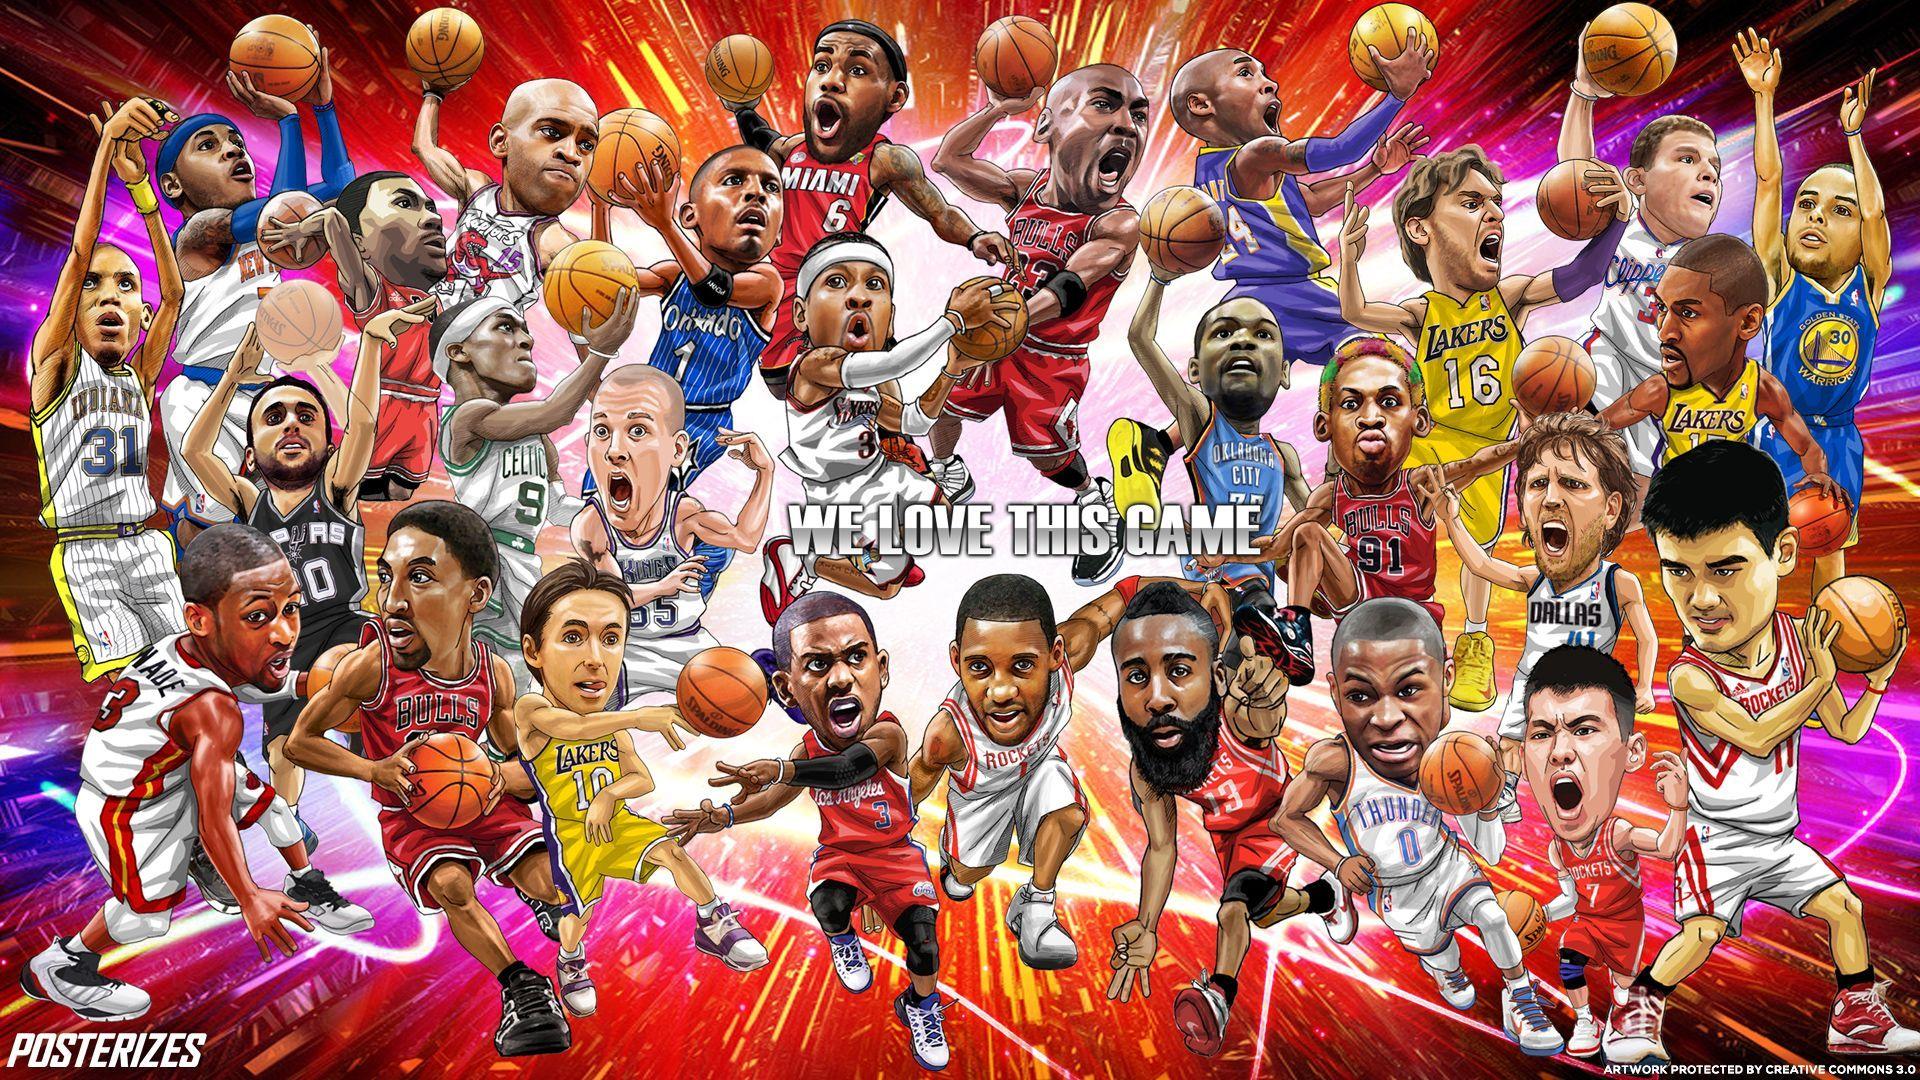 NBA Legends Wallpaper HD 1080 Free Download Desktop. Nba picture, Nba legends art, Nba art